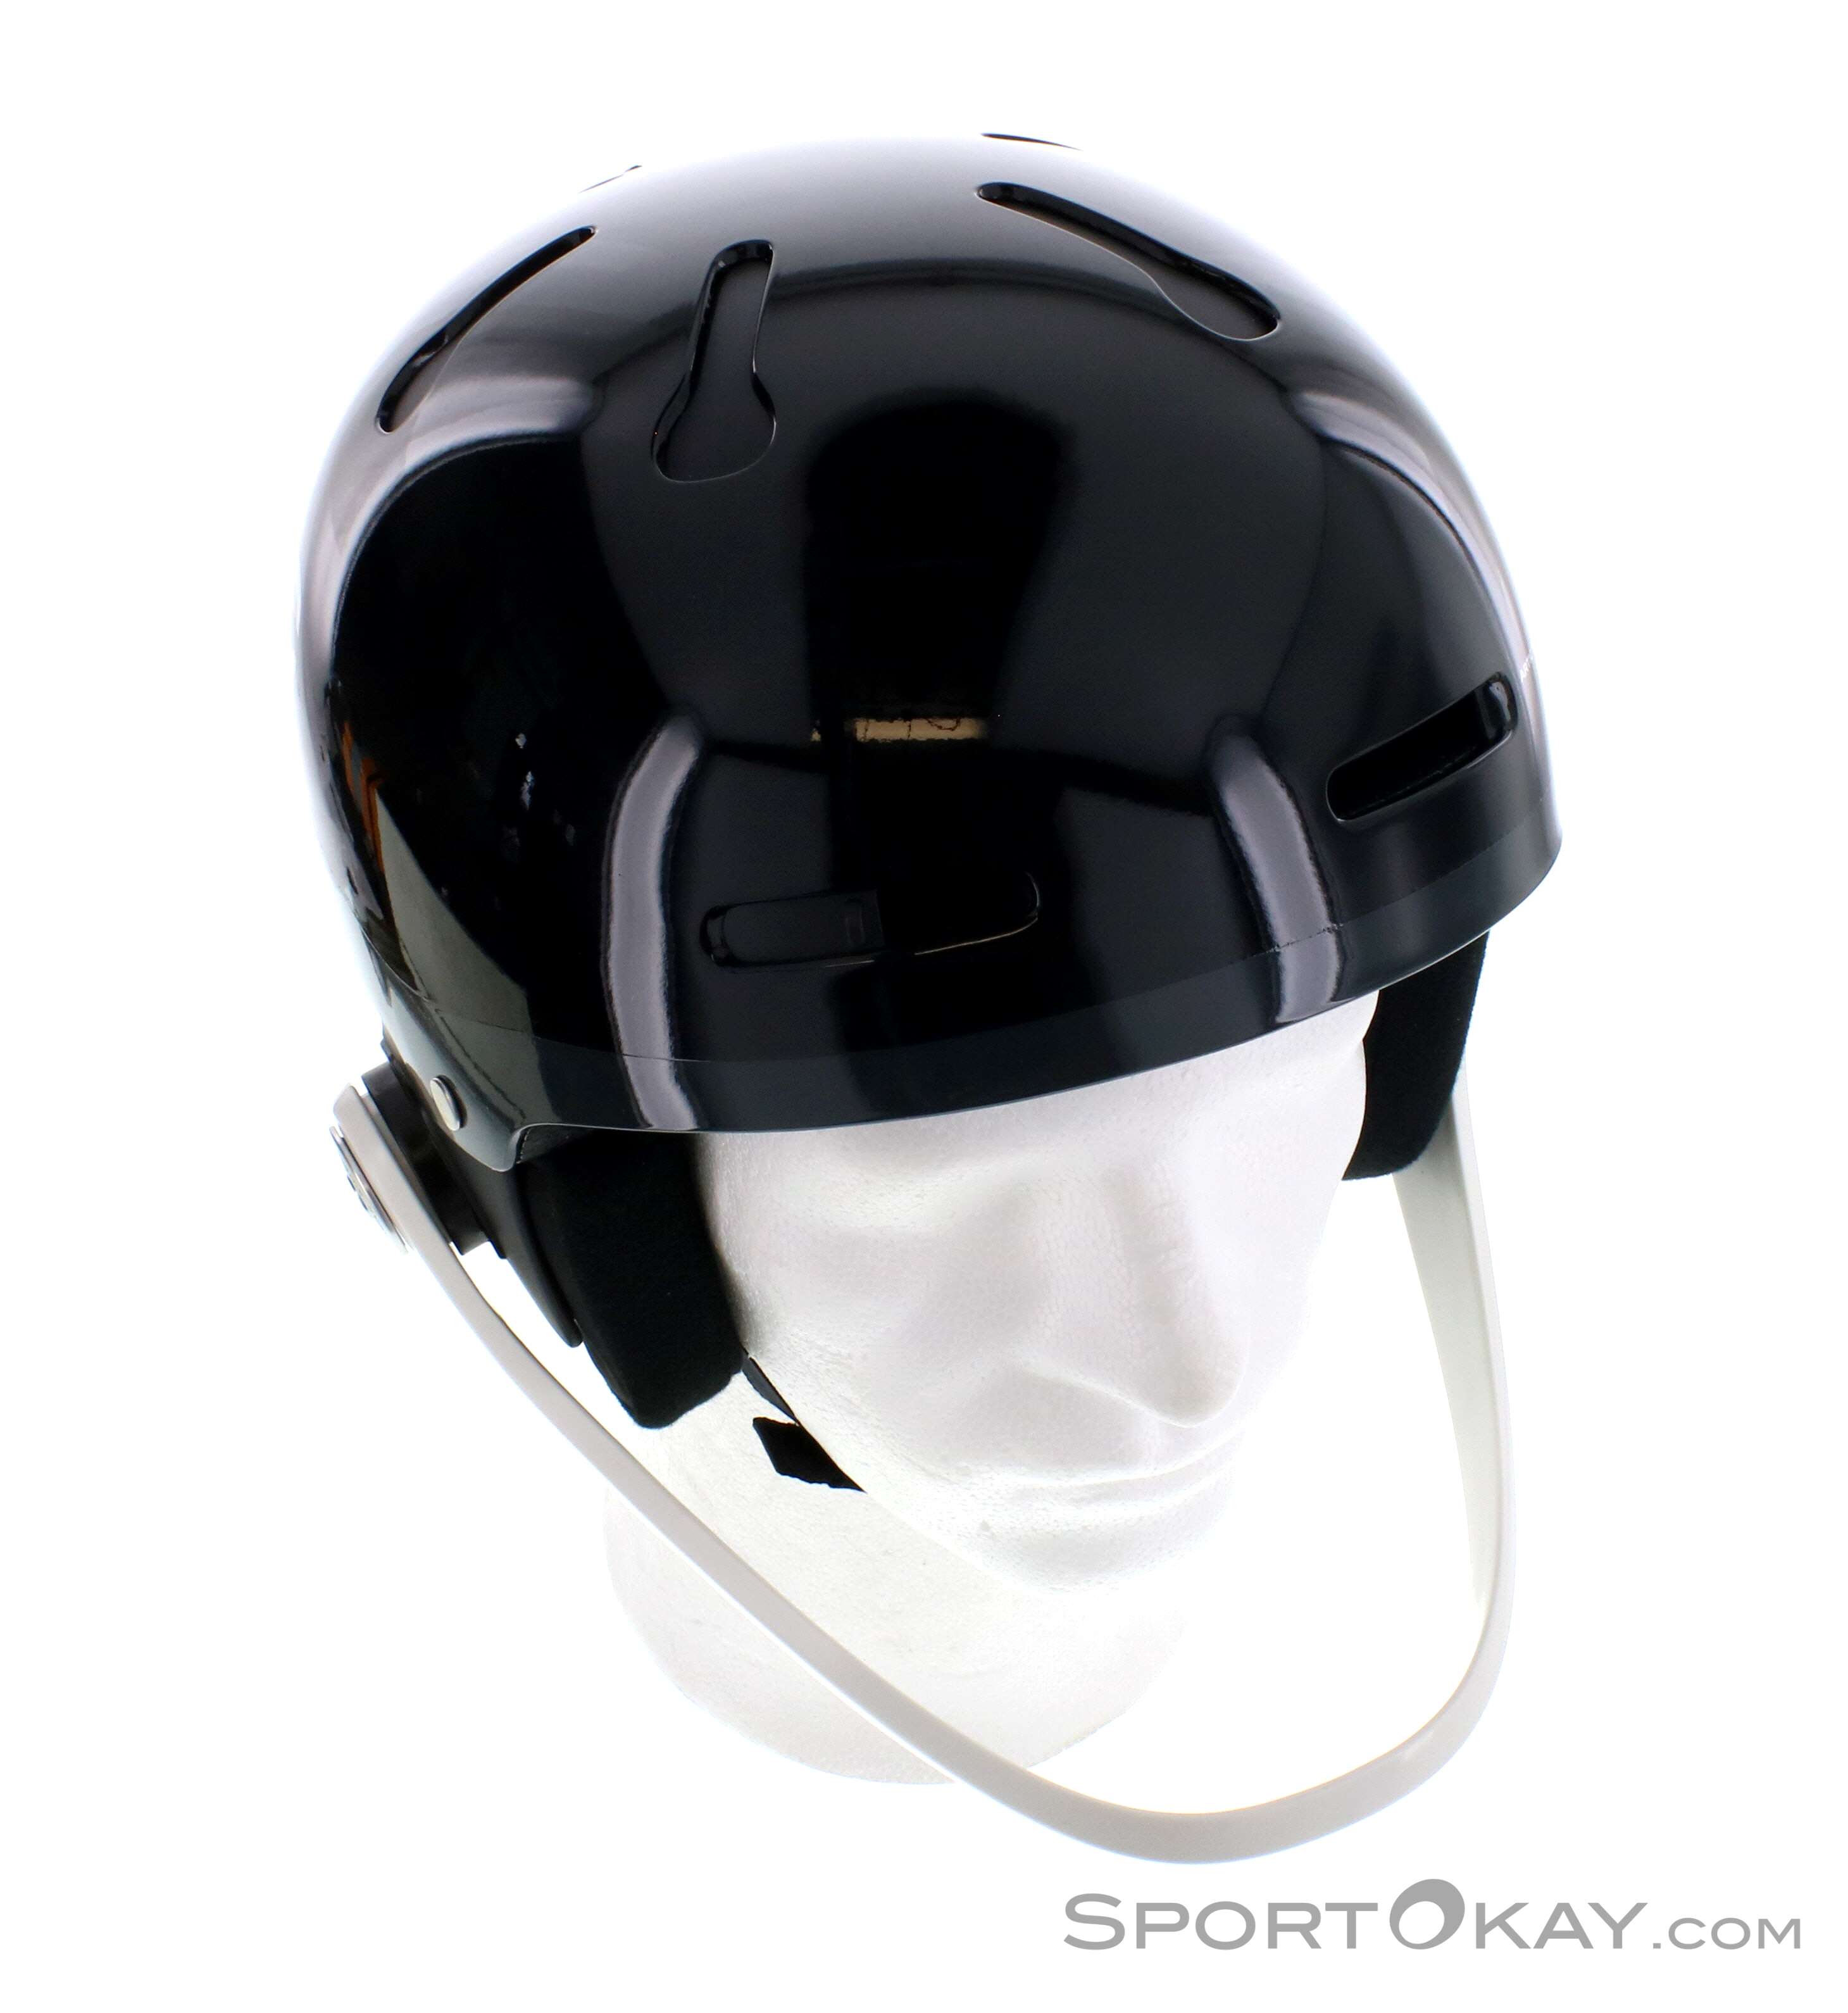 POC Artic SL SPIN Ski Helmet - Uranium Black - Ski Equipment from